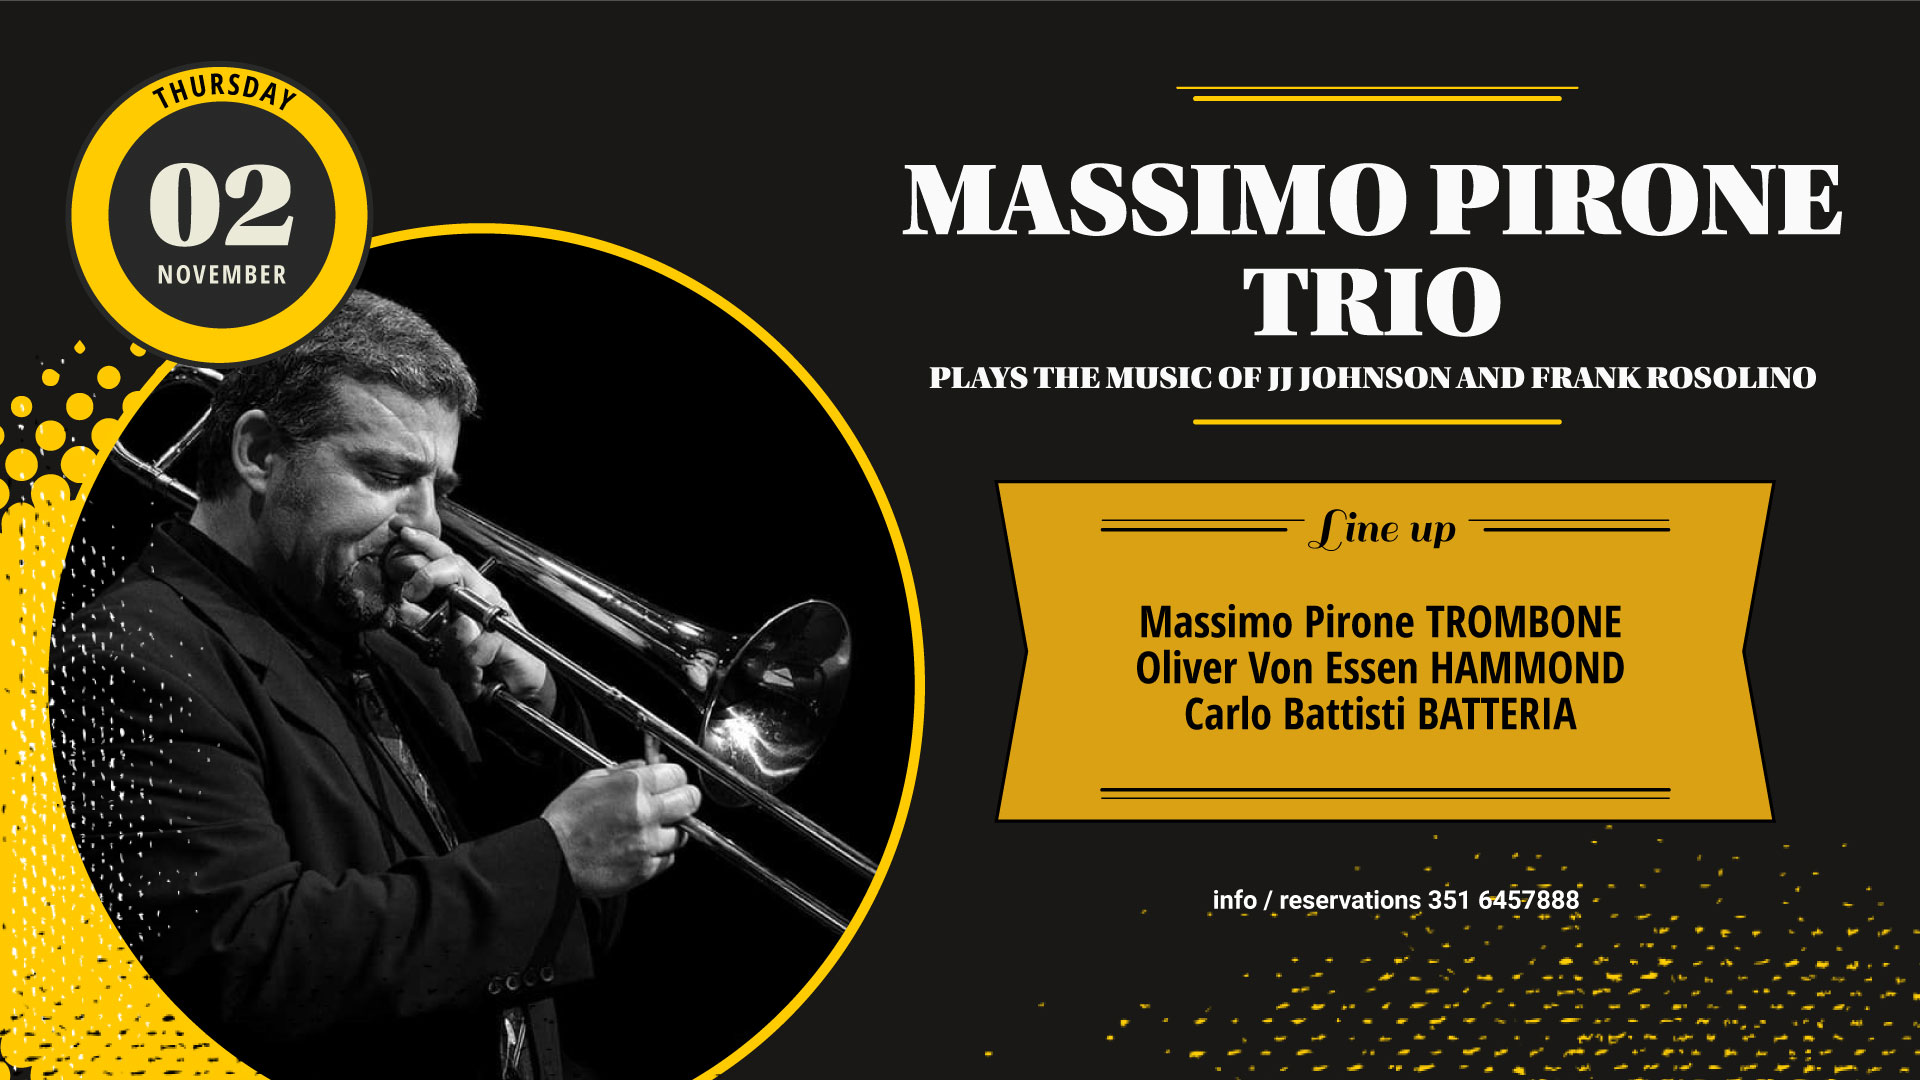 Massimo Pirone trio plays the music of JJ Johnson and Frank Rosolino